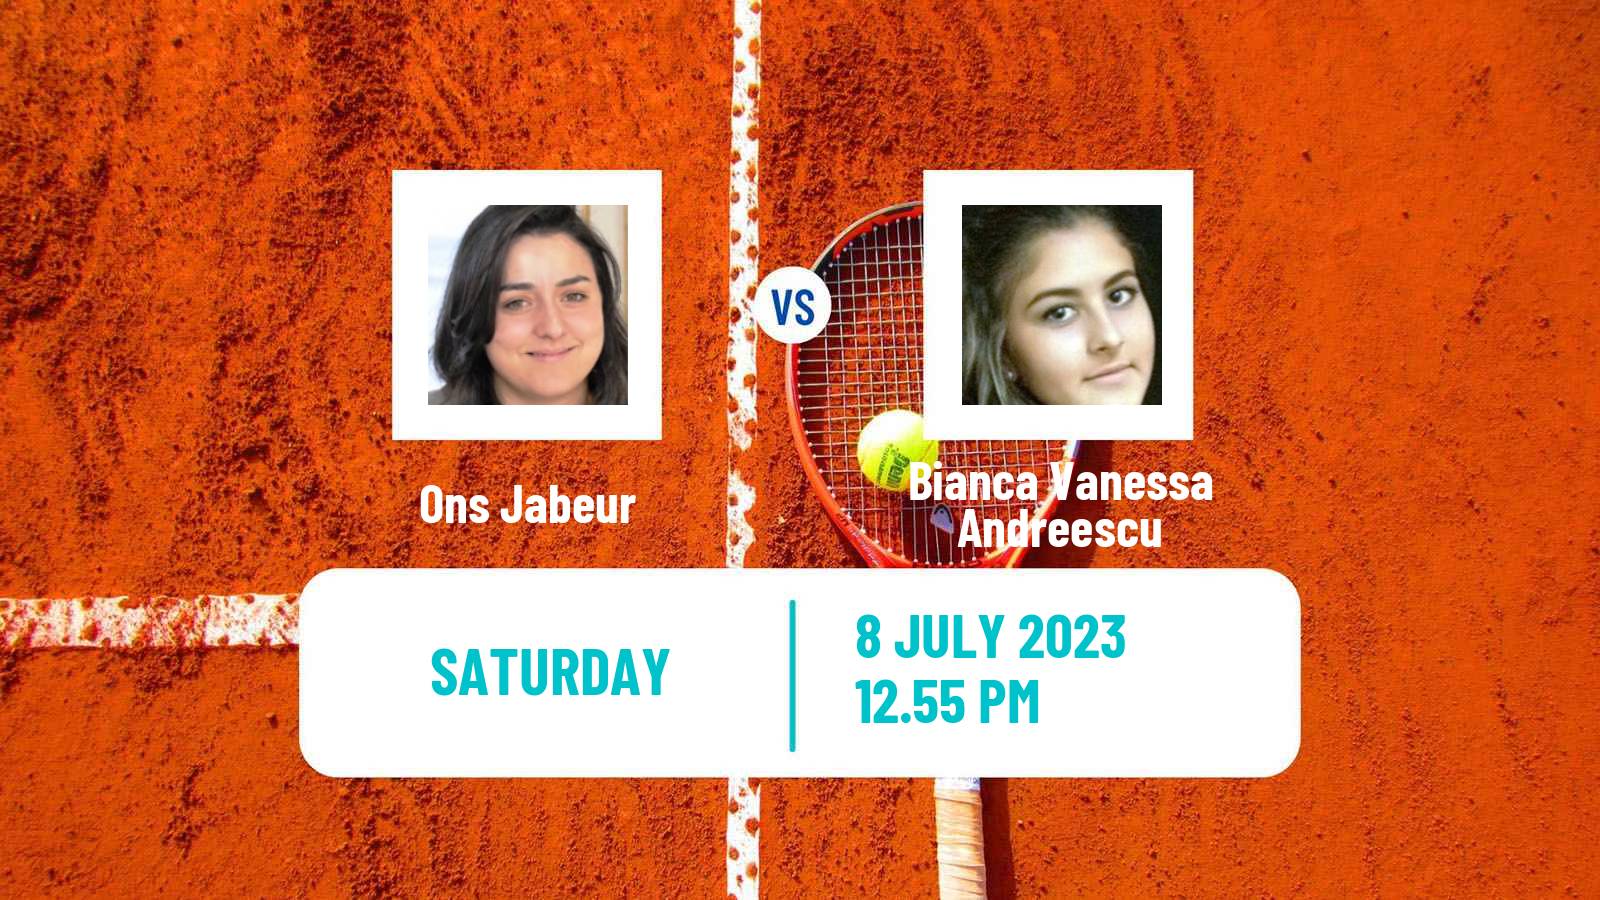 Tennis WTA Wimbledon Ons Jabeur - Bianca Vanessa Andreescu